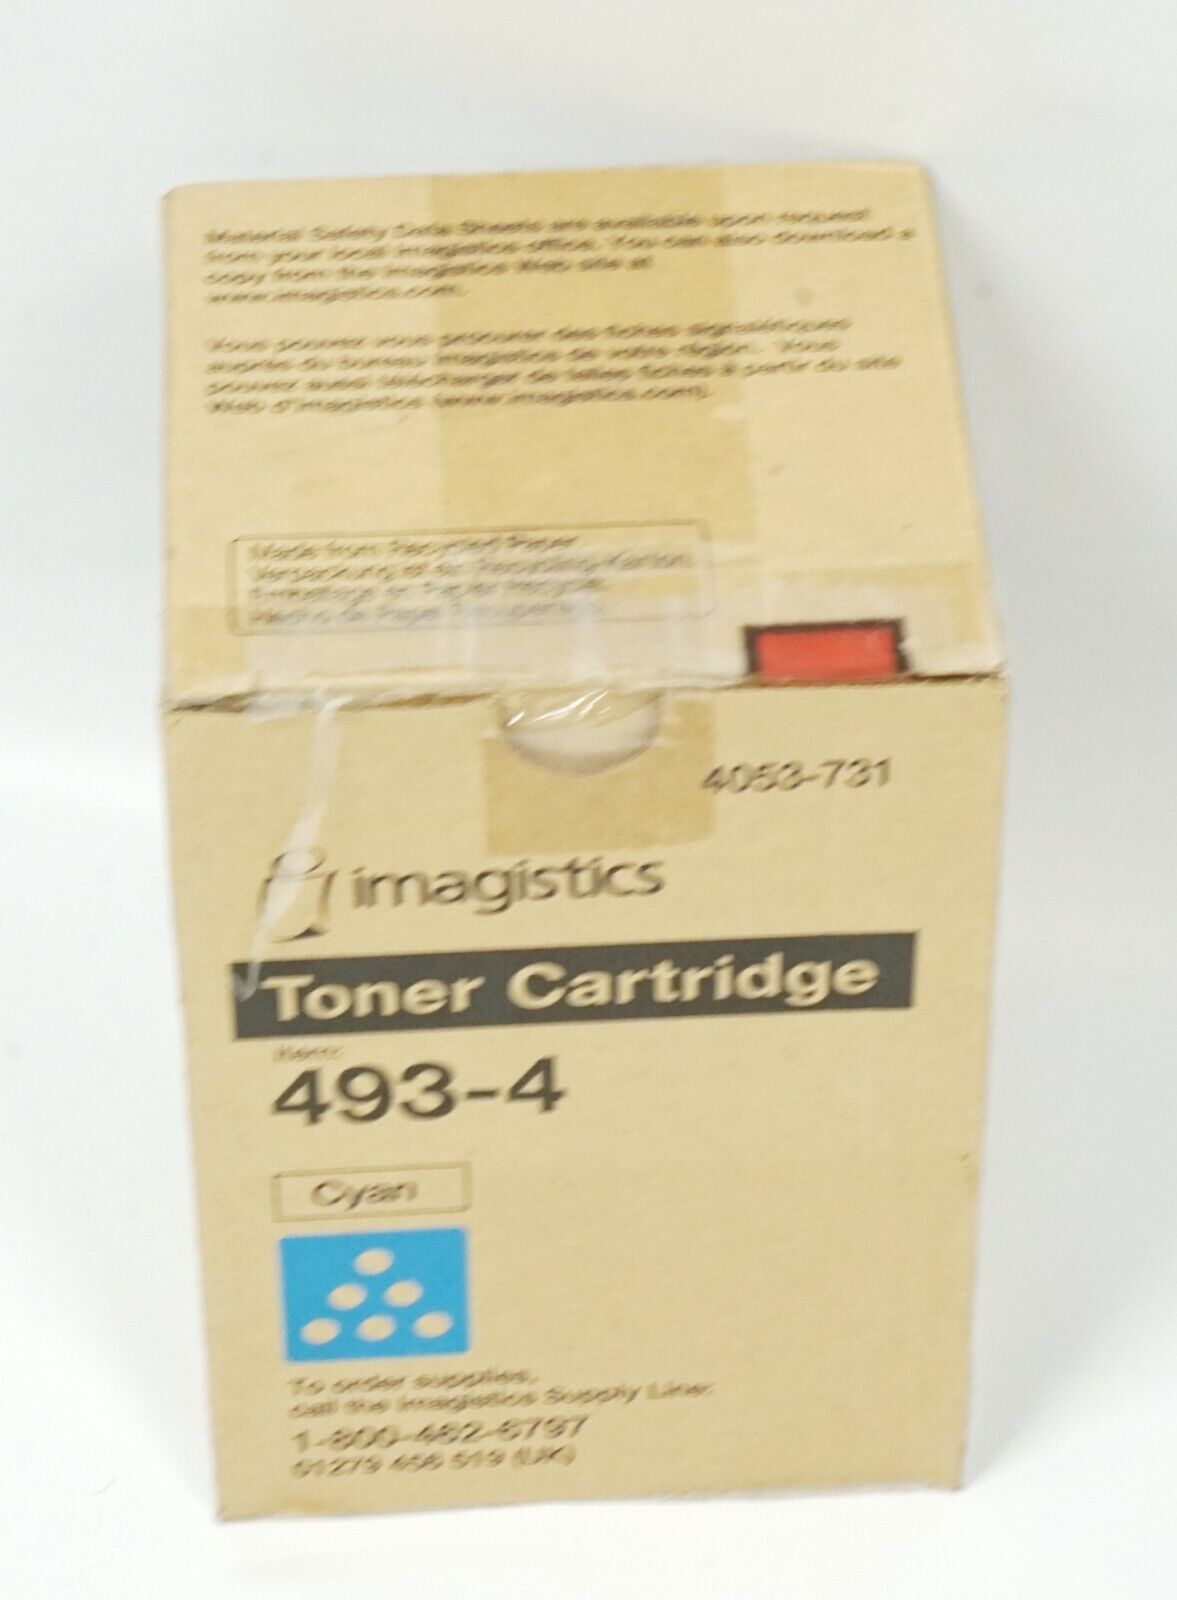 Imagistic Toner Cartridge 493-4 Cryan 4053-731 Ink Small Box